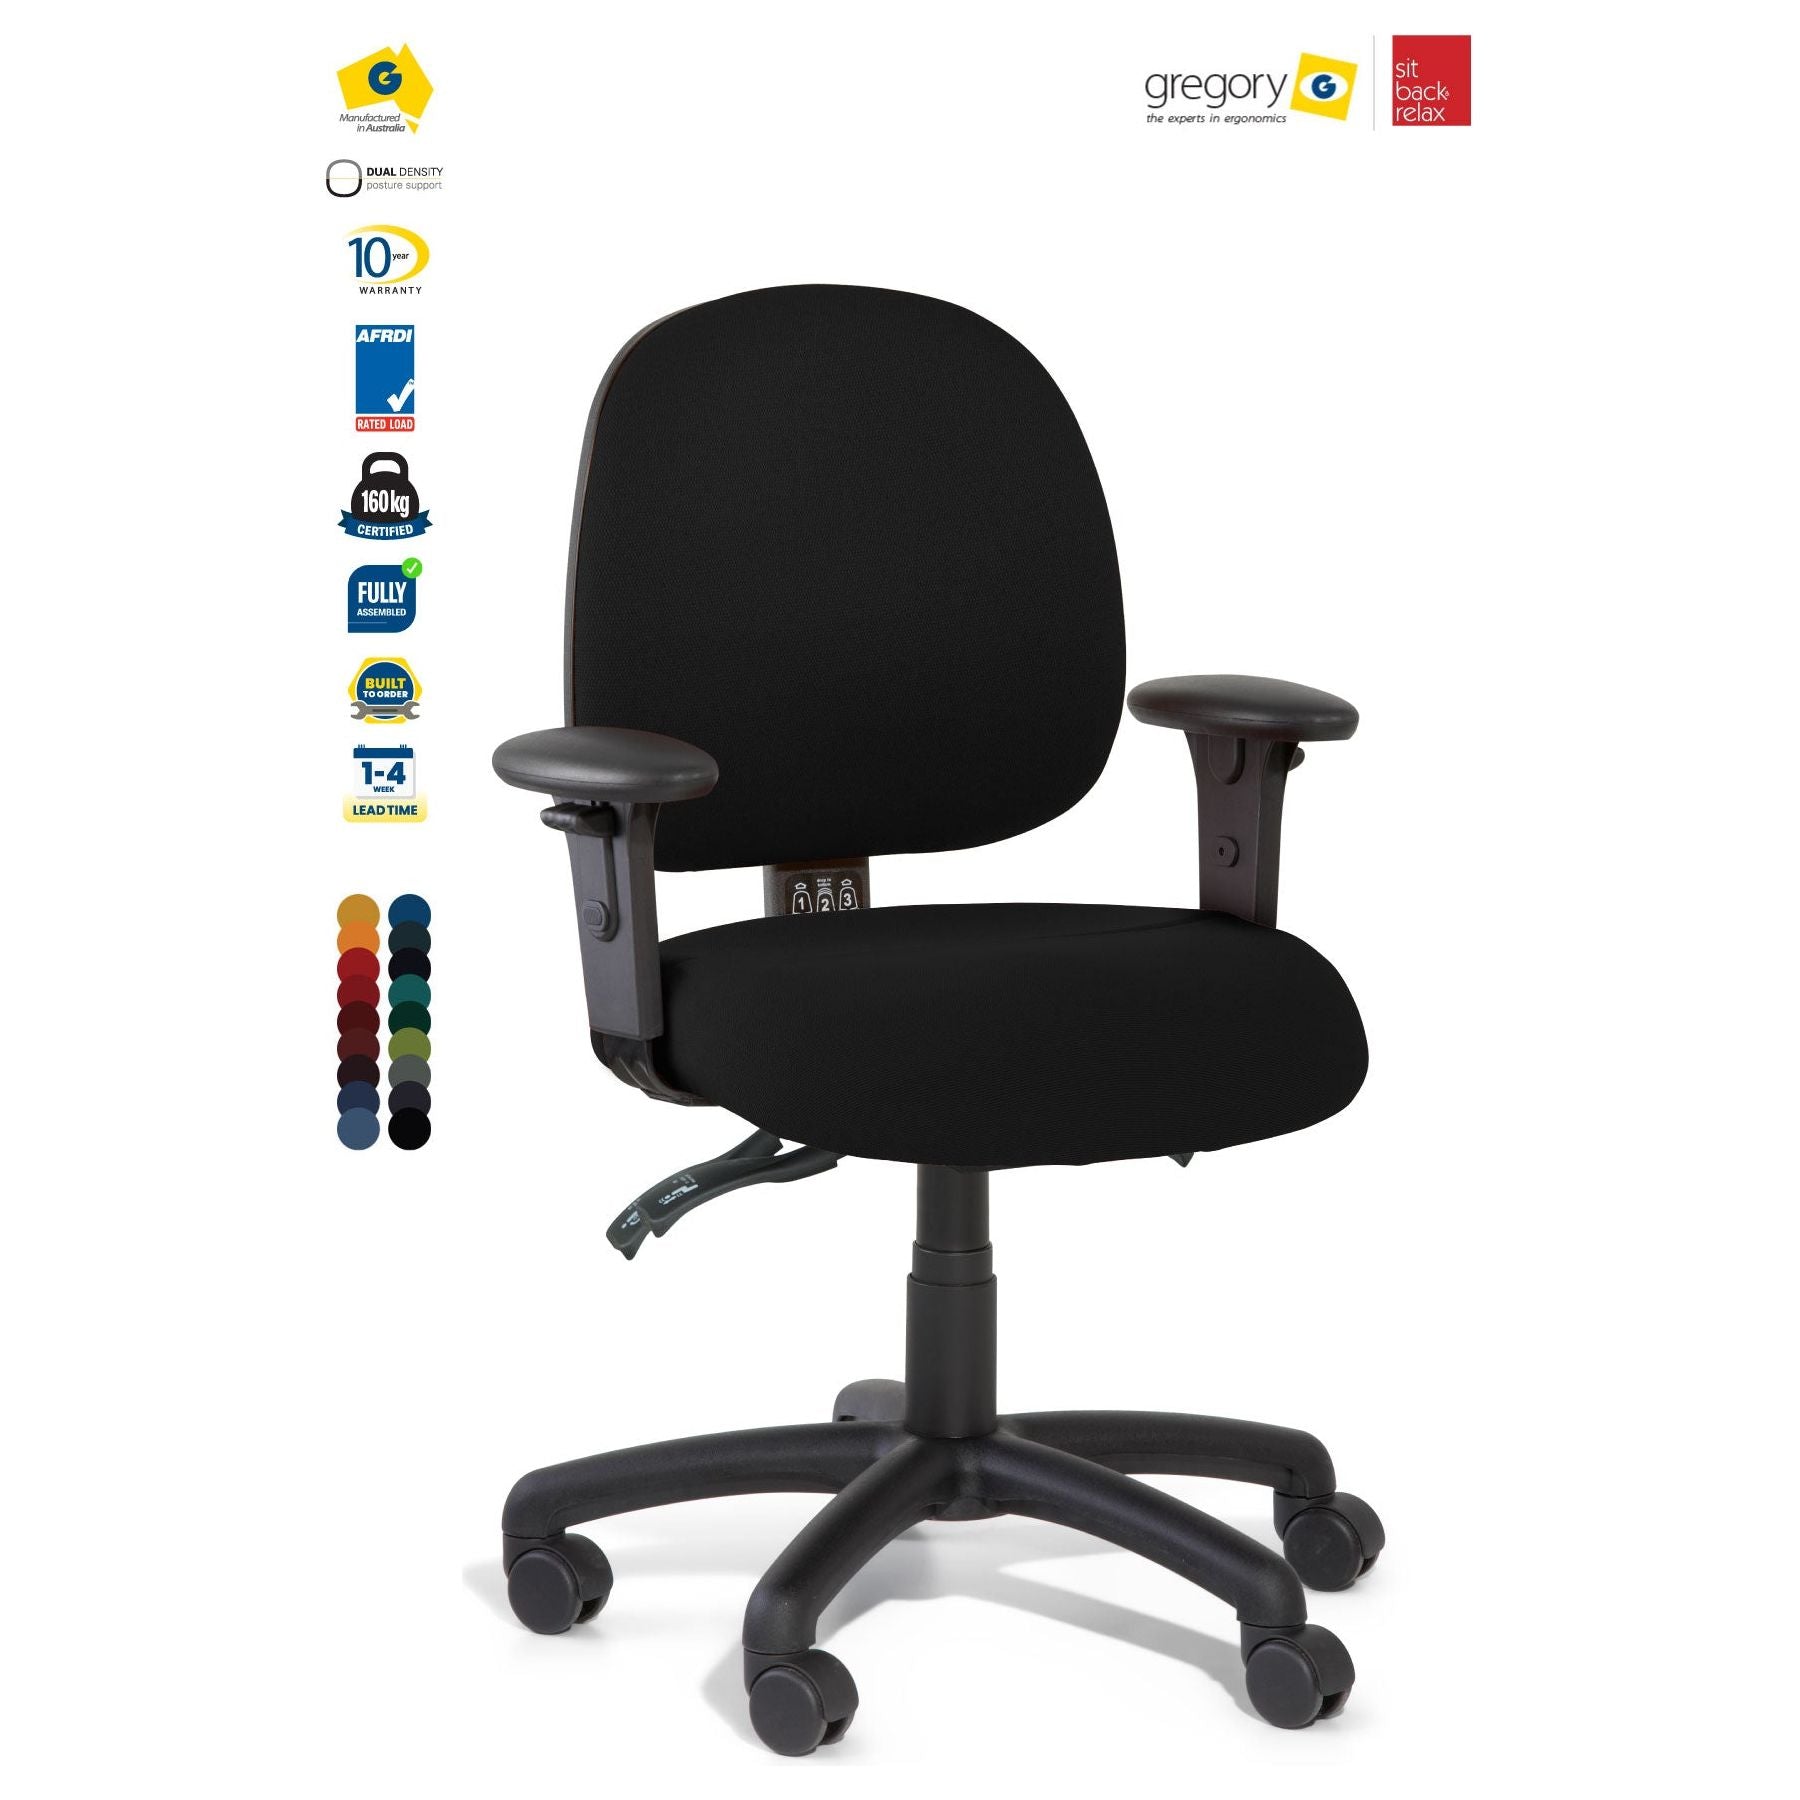 Gregory Inca Medium Back Office Chair